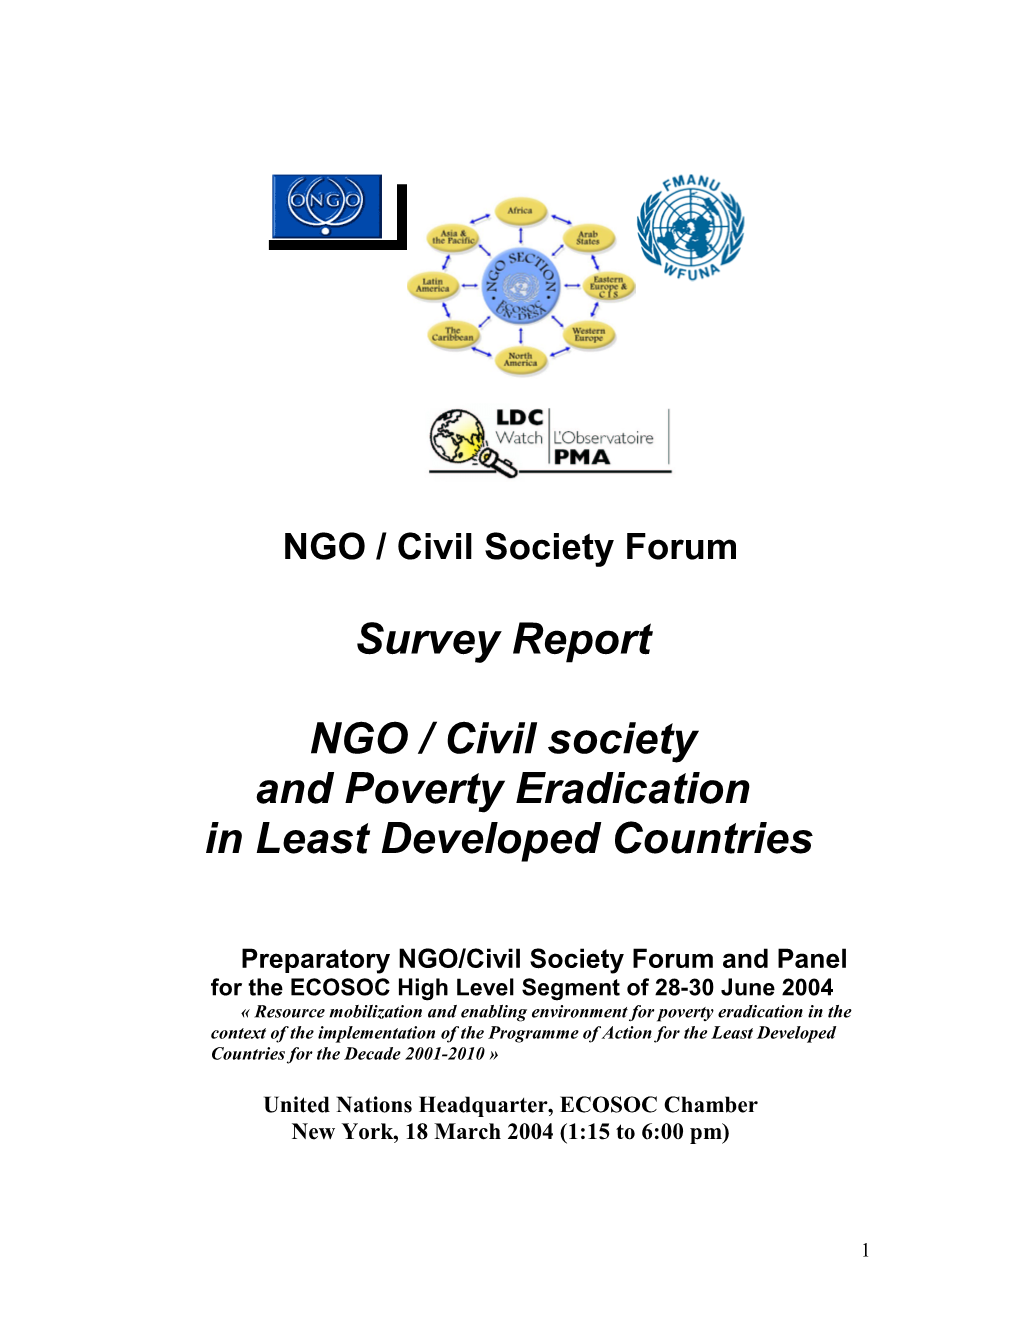 Preparatory NGO/Civil Society Forum